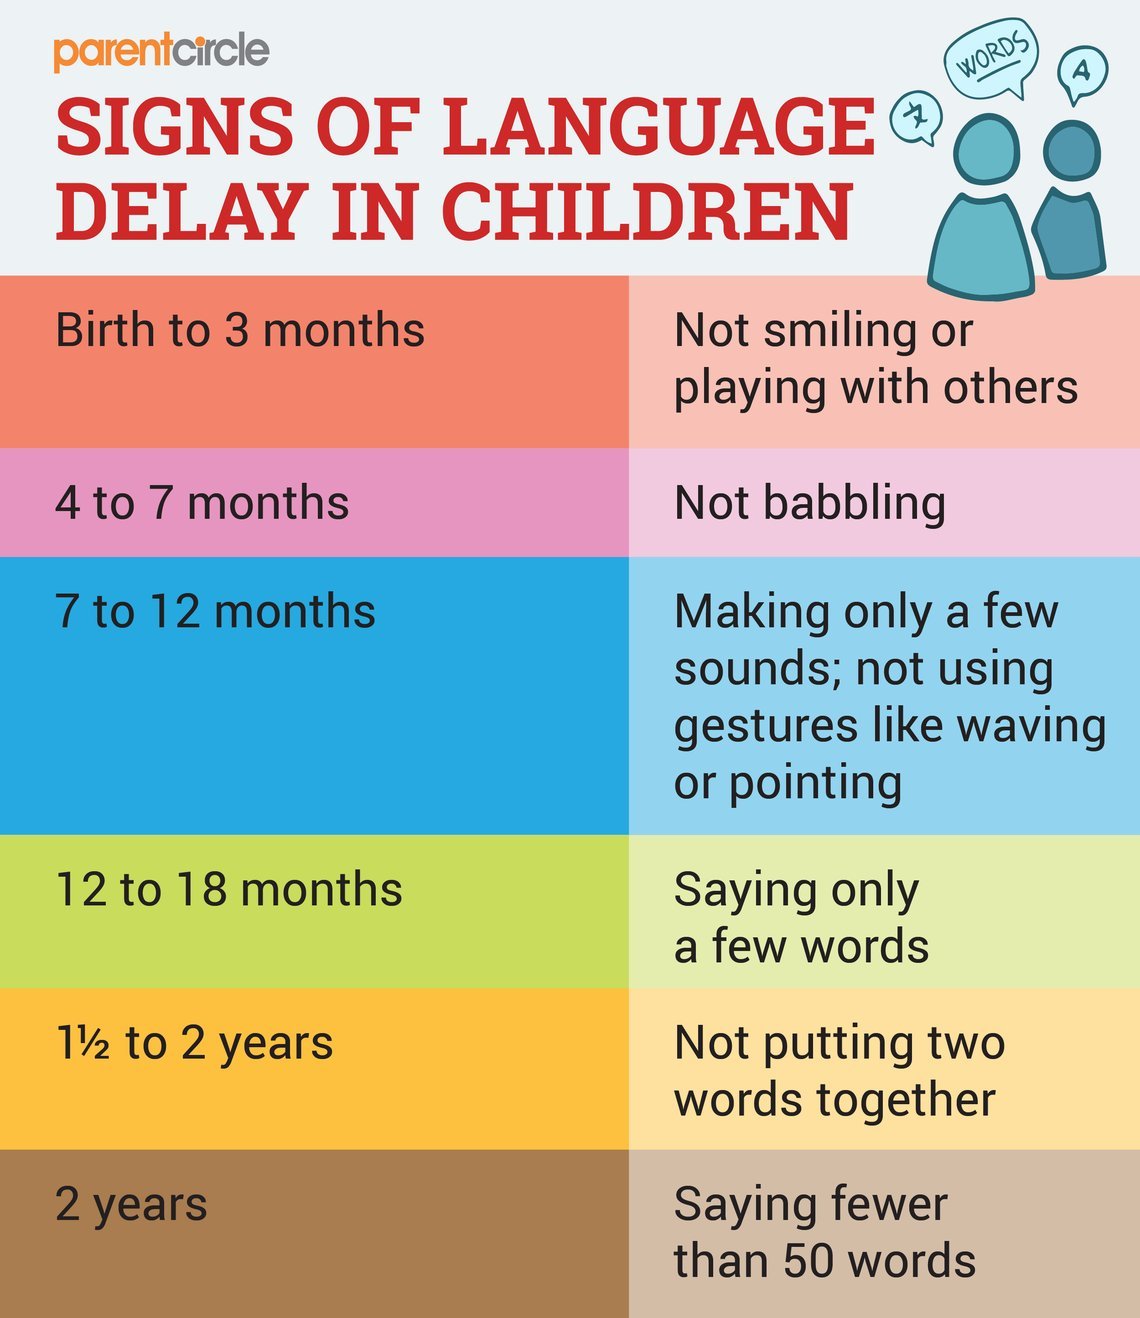 Can Baby Sign Language Delay Speech Development?